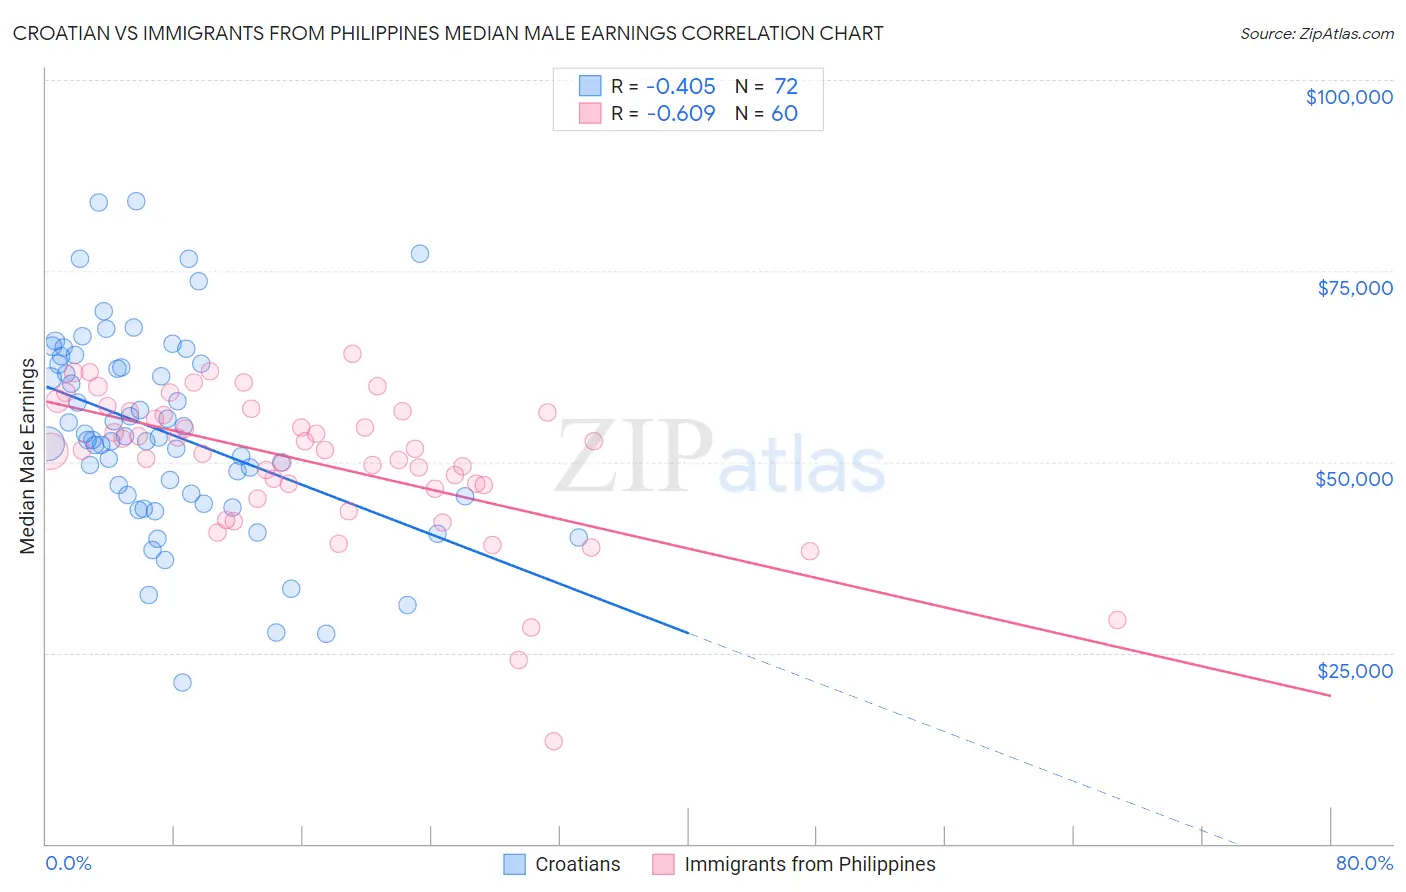 Croatian vs Immigrants from Philippines Median Male Earnings